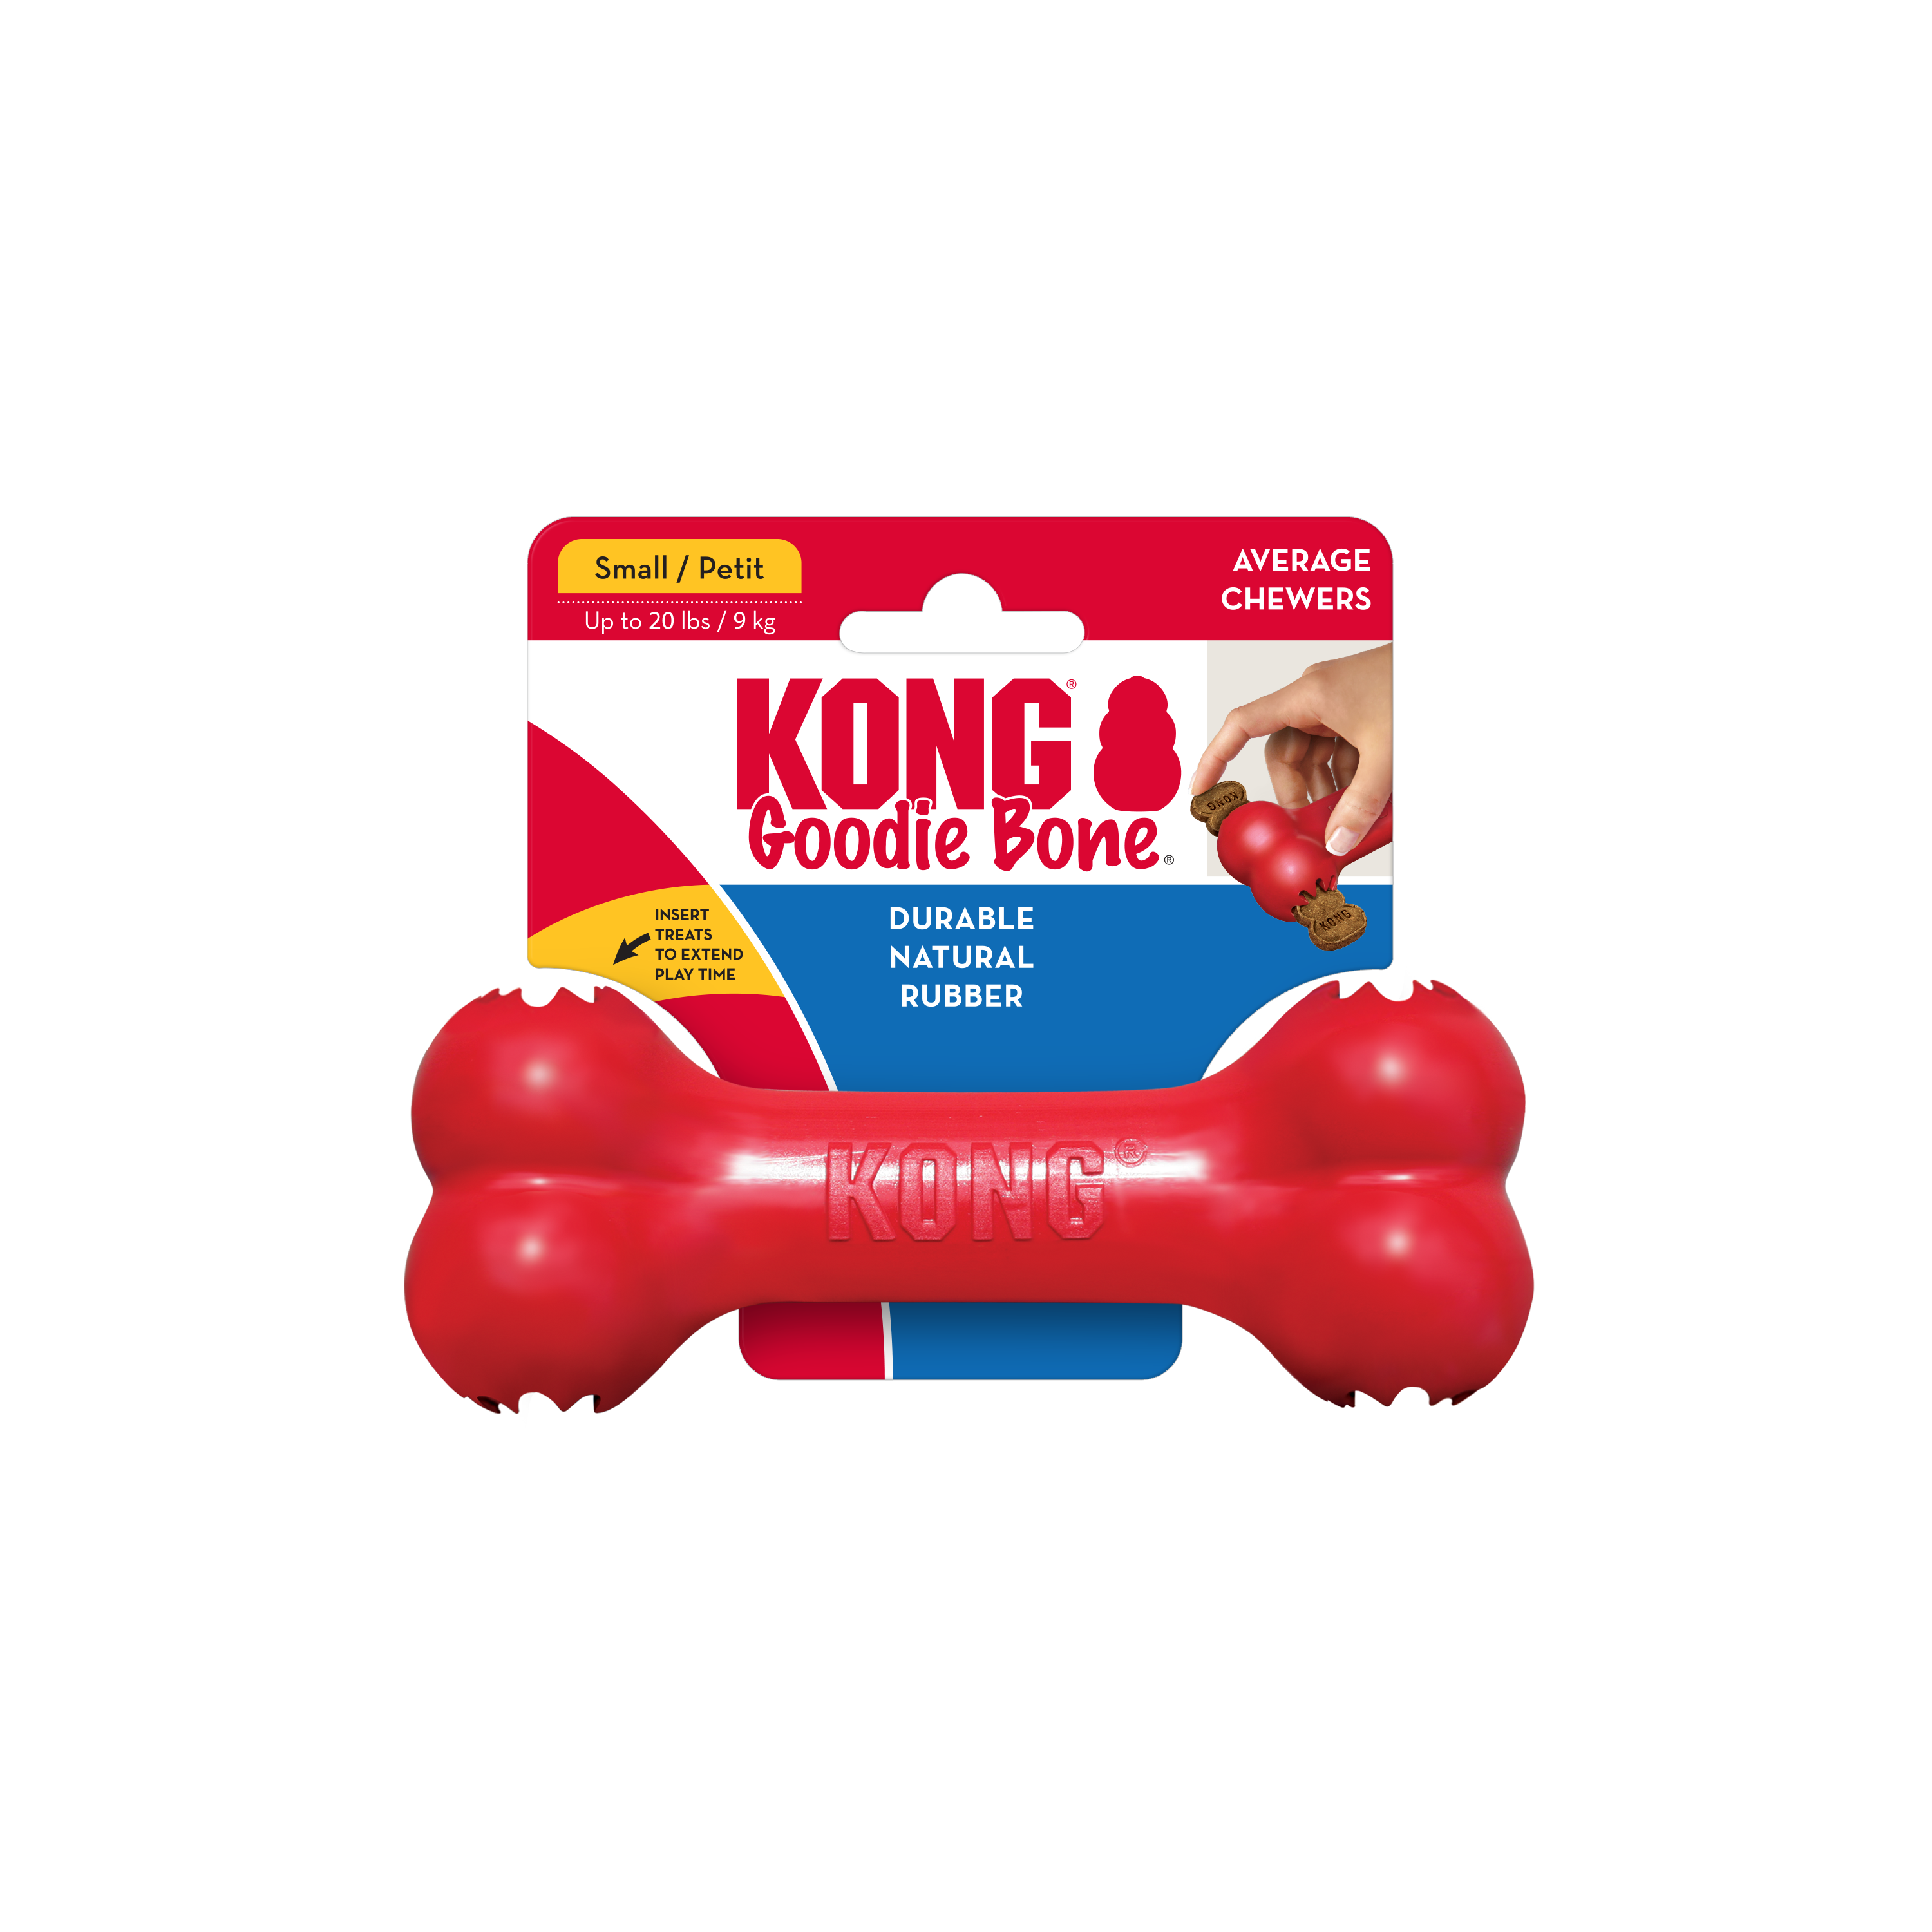 KONG Goodie Bone onpack image du produit